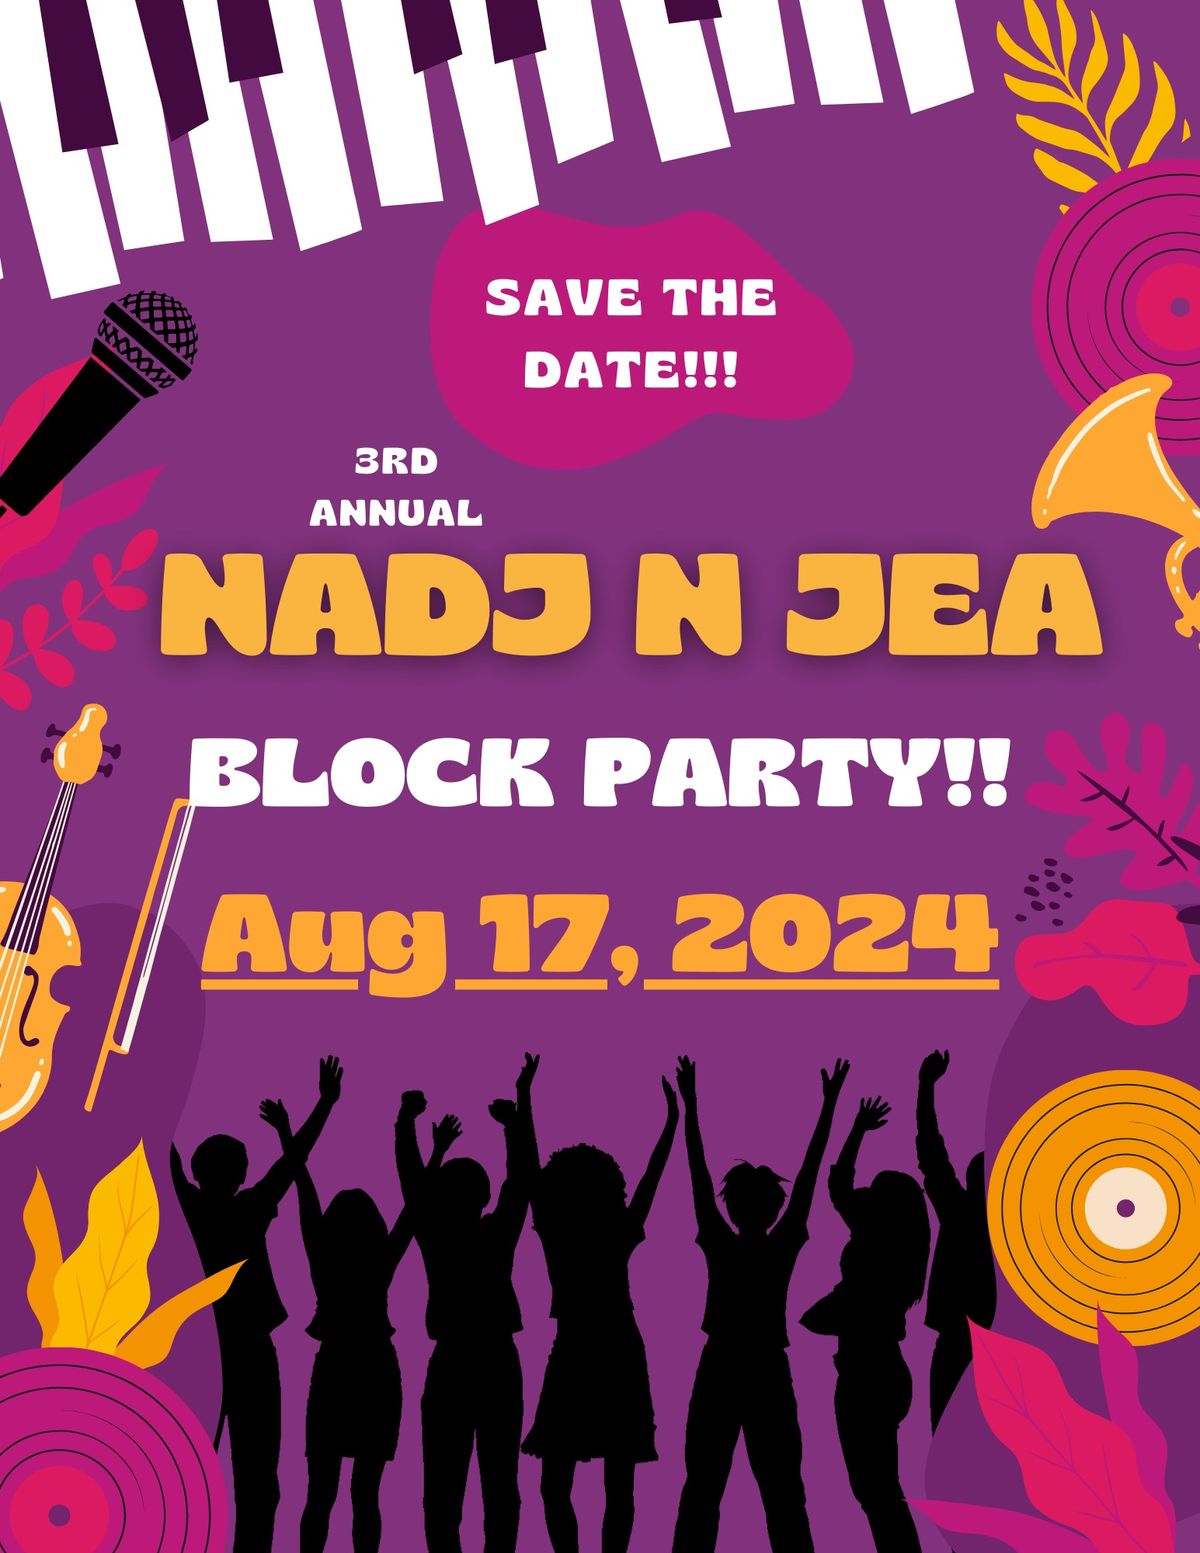 The NadjNJea Block Party!!